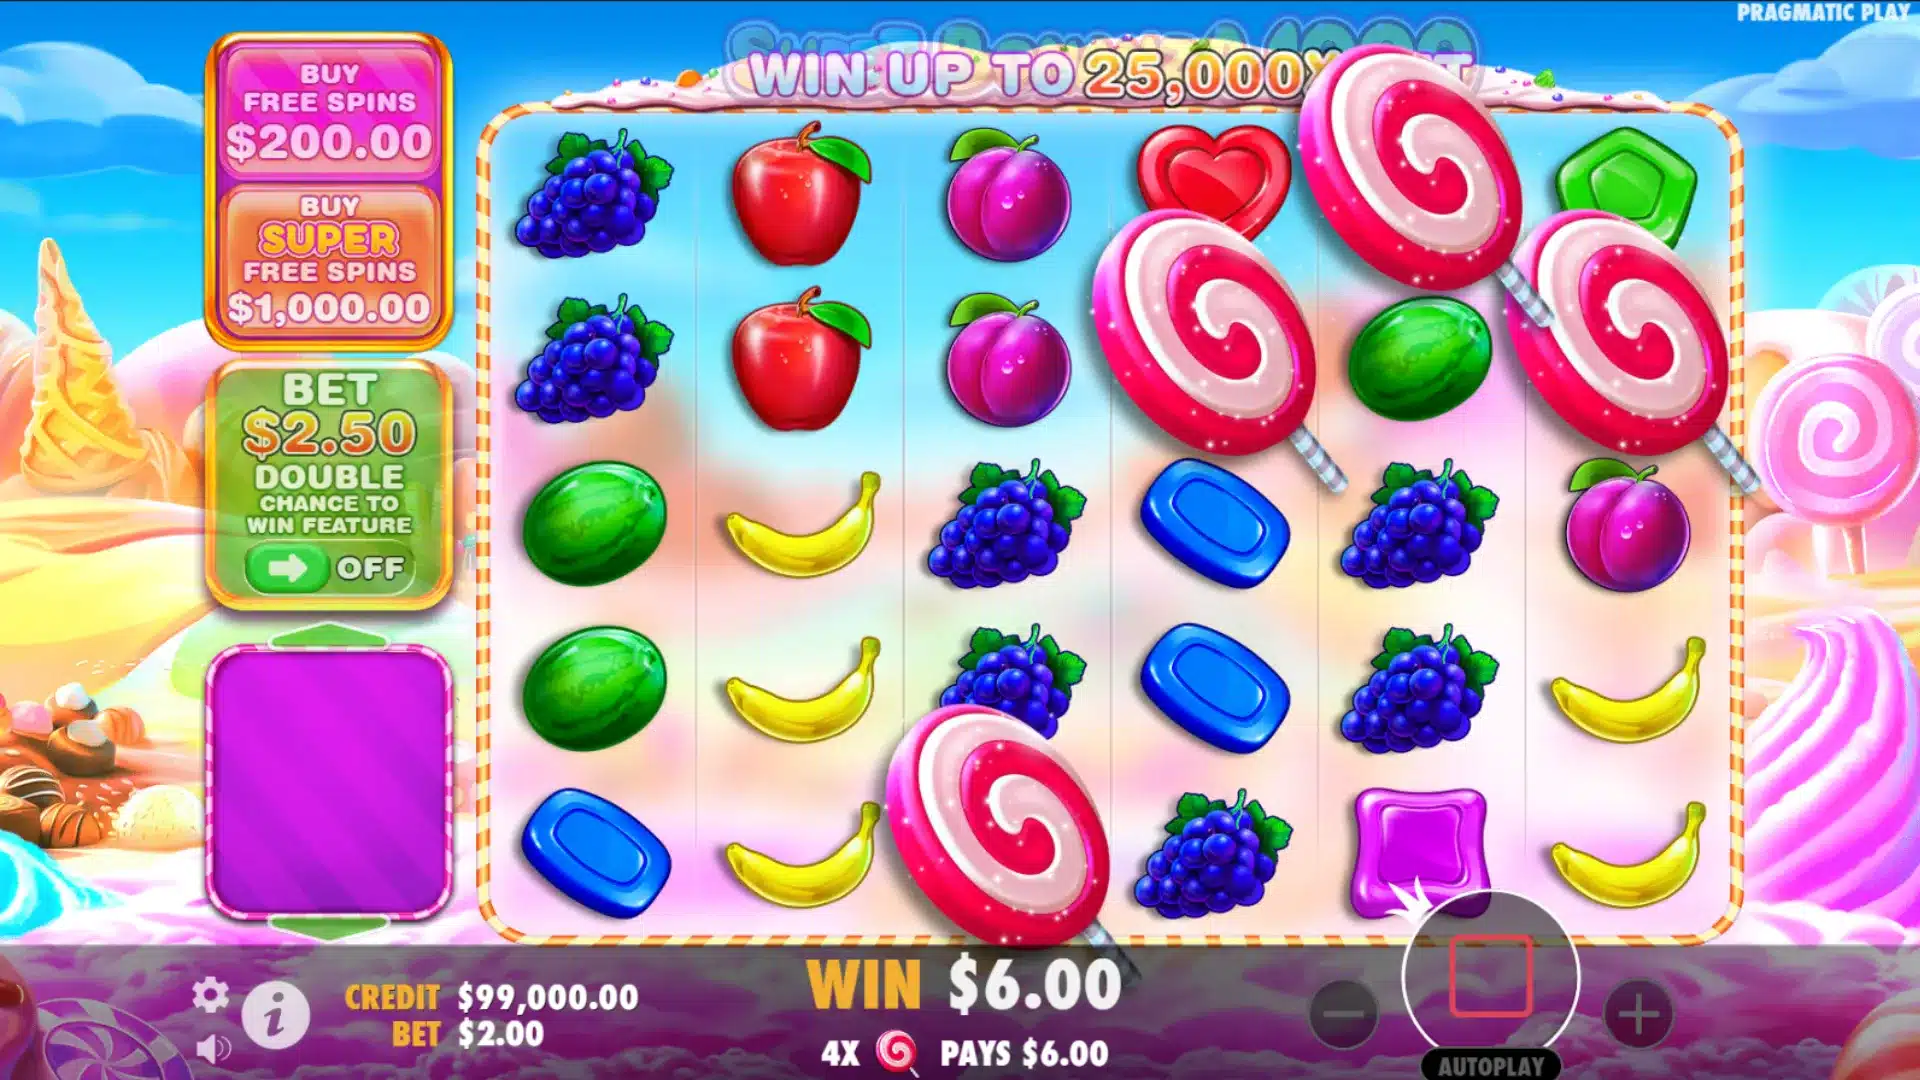 Sweet Bonanza 1000 Demo and Slot Review with Bonus Buy